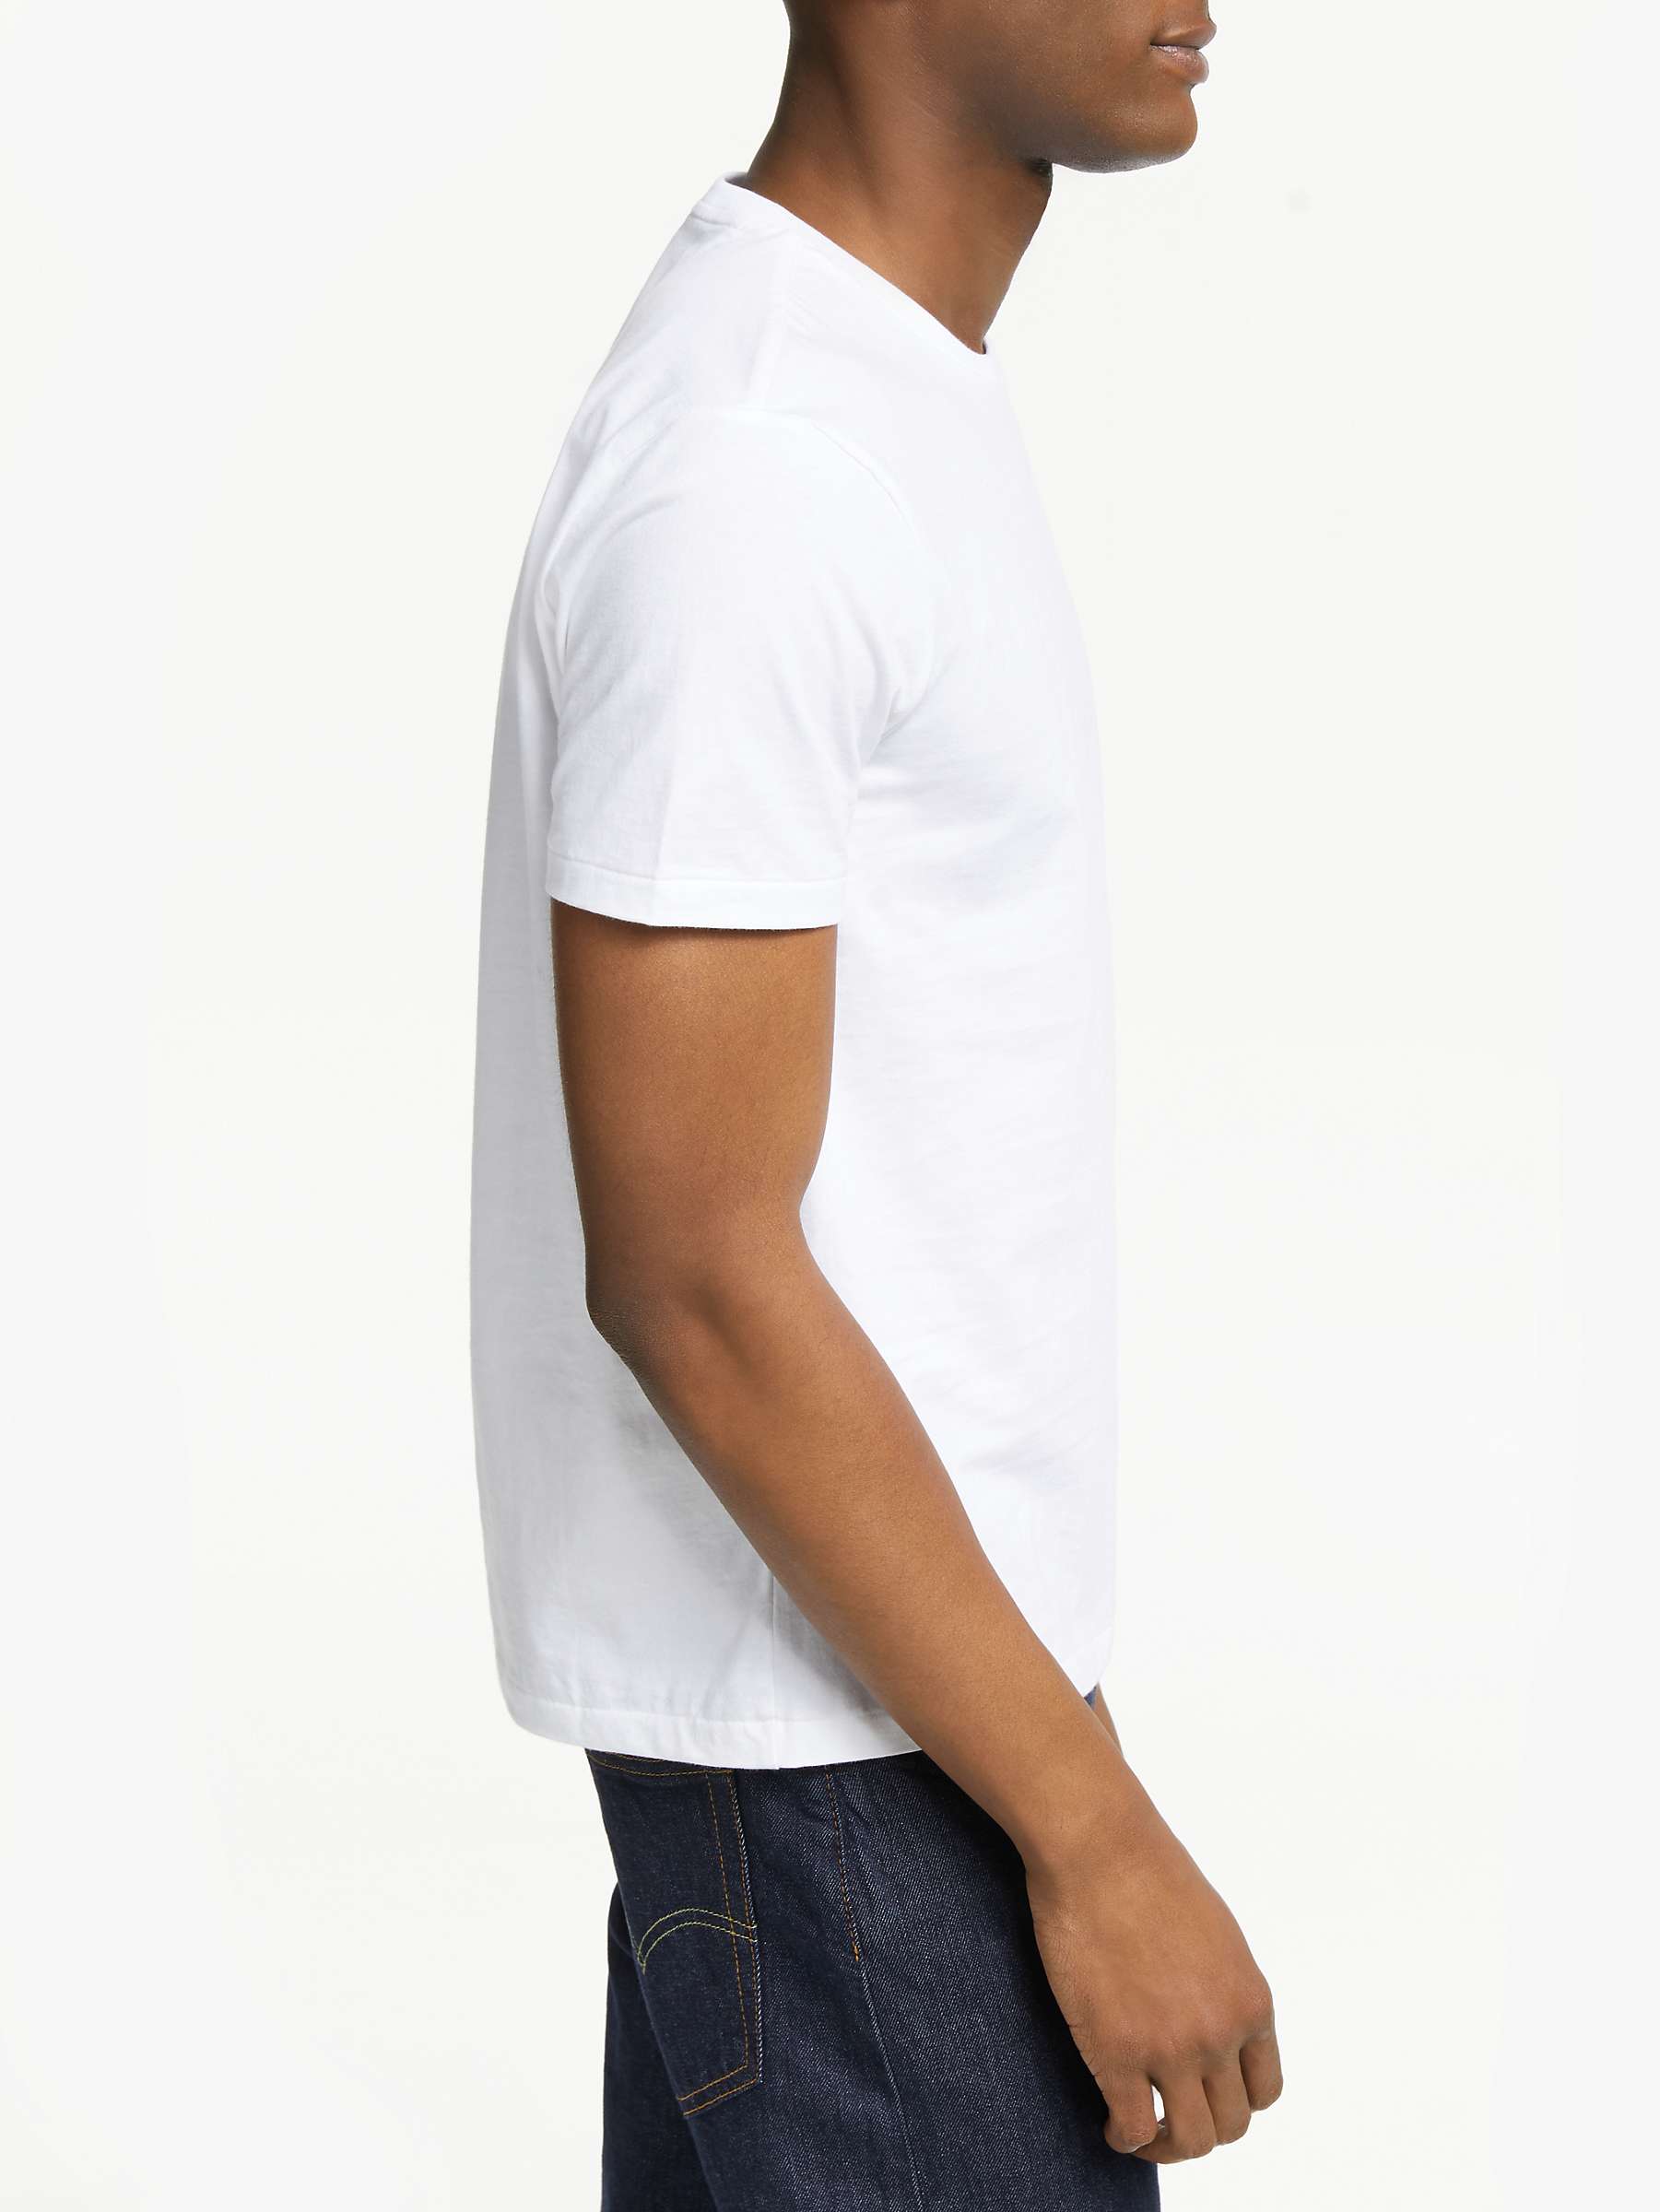 Buy Polo Ralph Lauren Short Sleeve Custom Fit Crew Neck T-Shirt Online at johnlewis.com